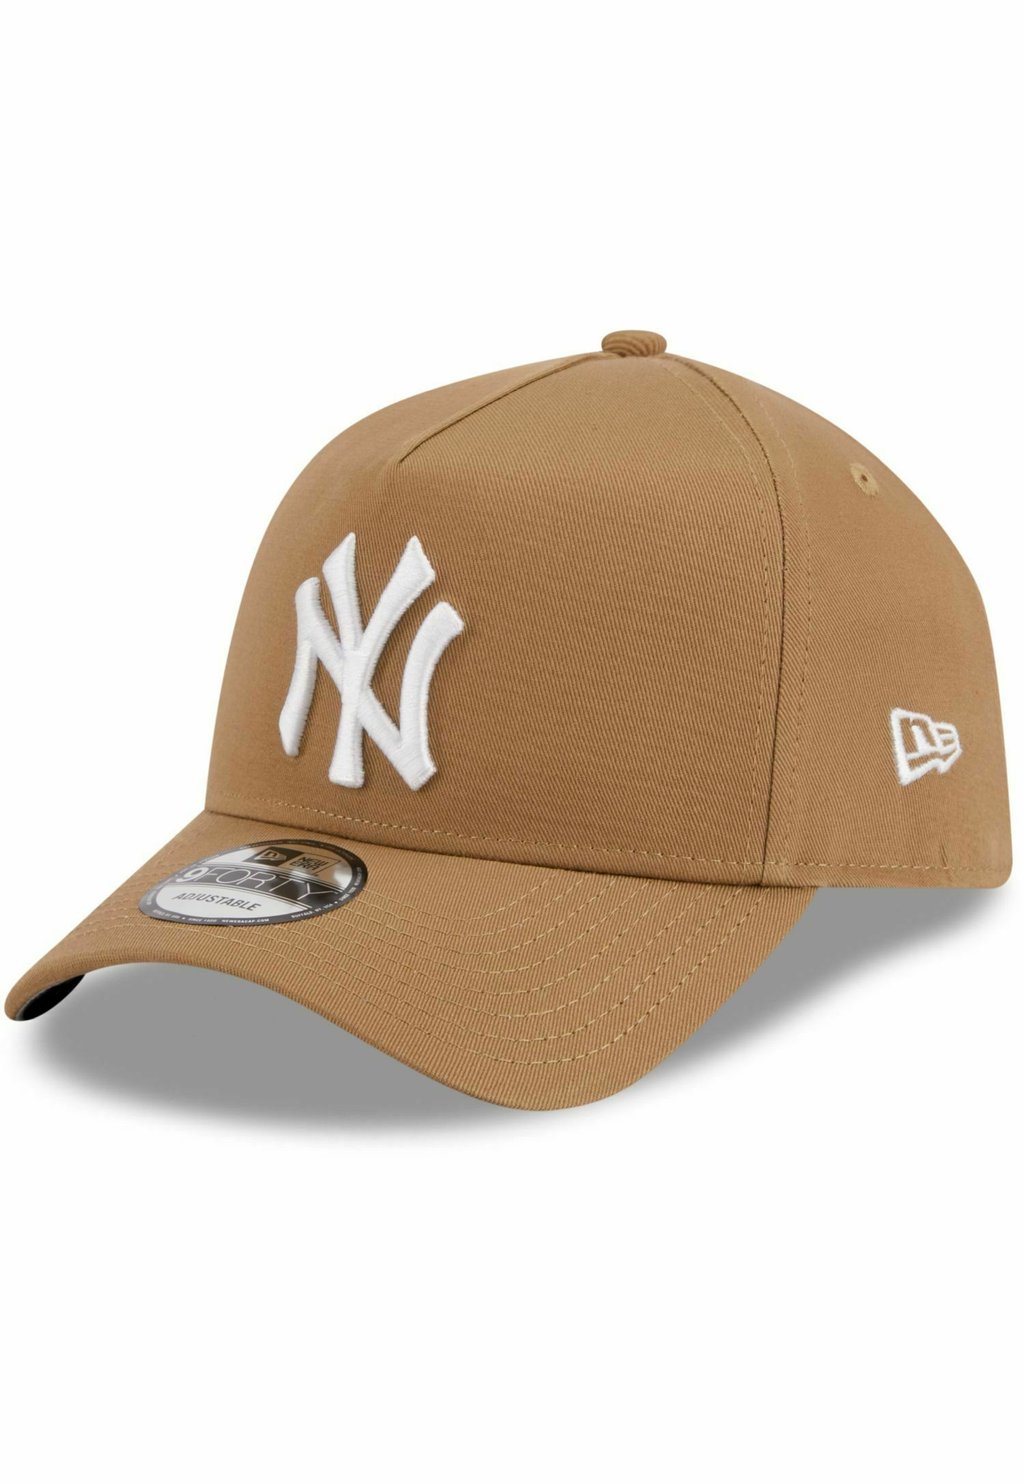 Бейсболка 9FORTY AFRAME TRUCKER NEW YORK YANKEES New Era, цвет khaki